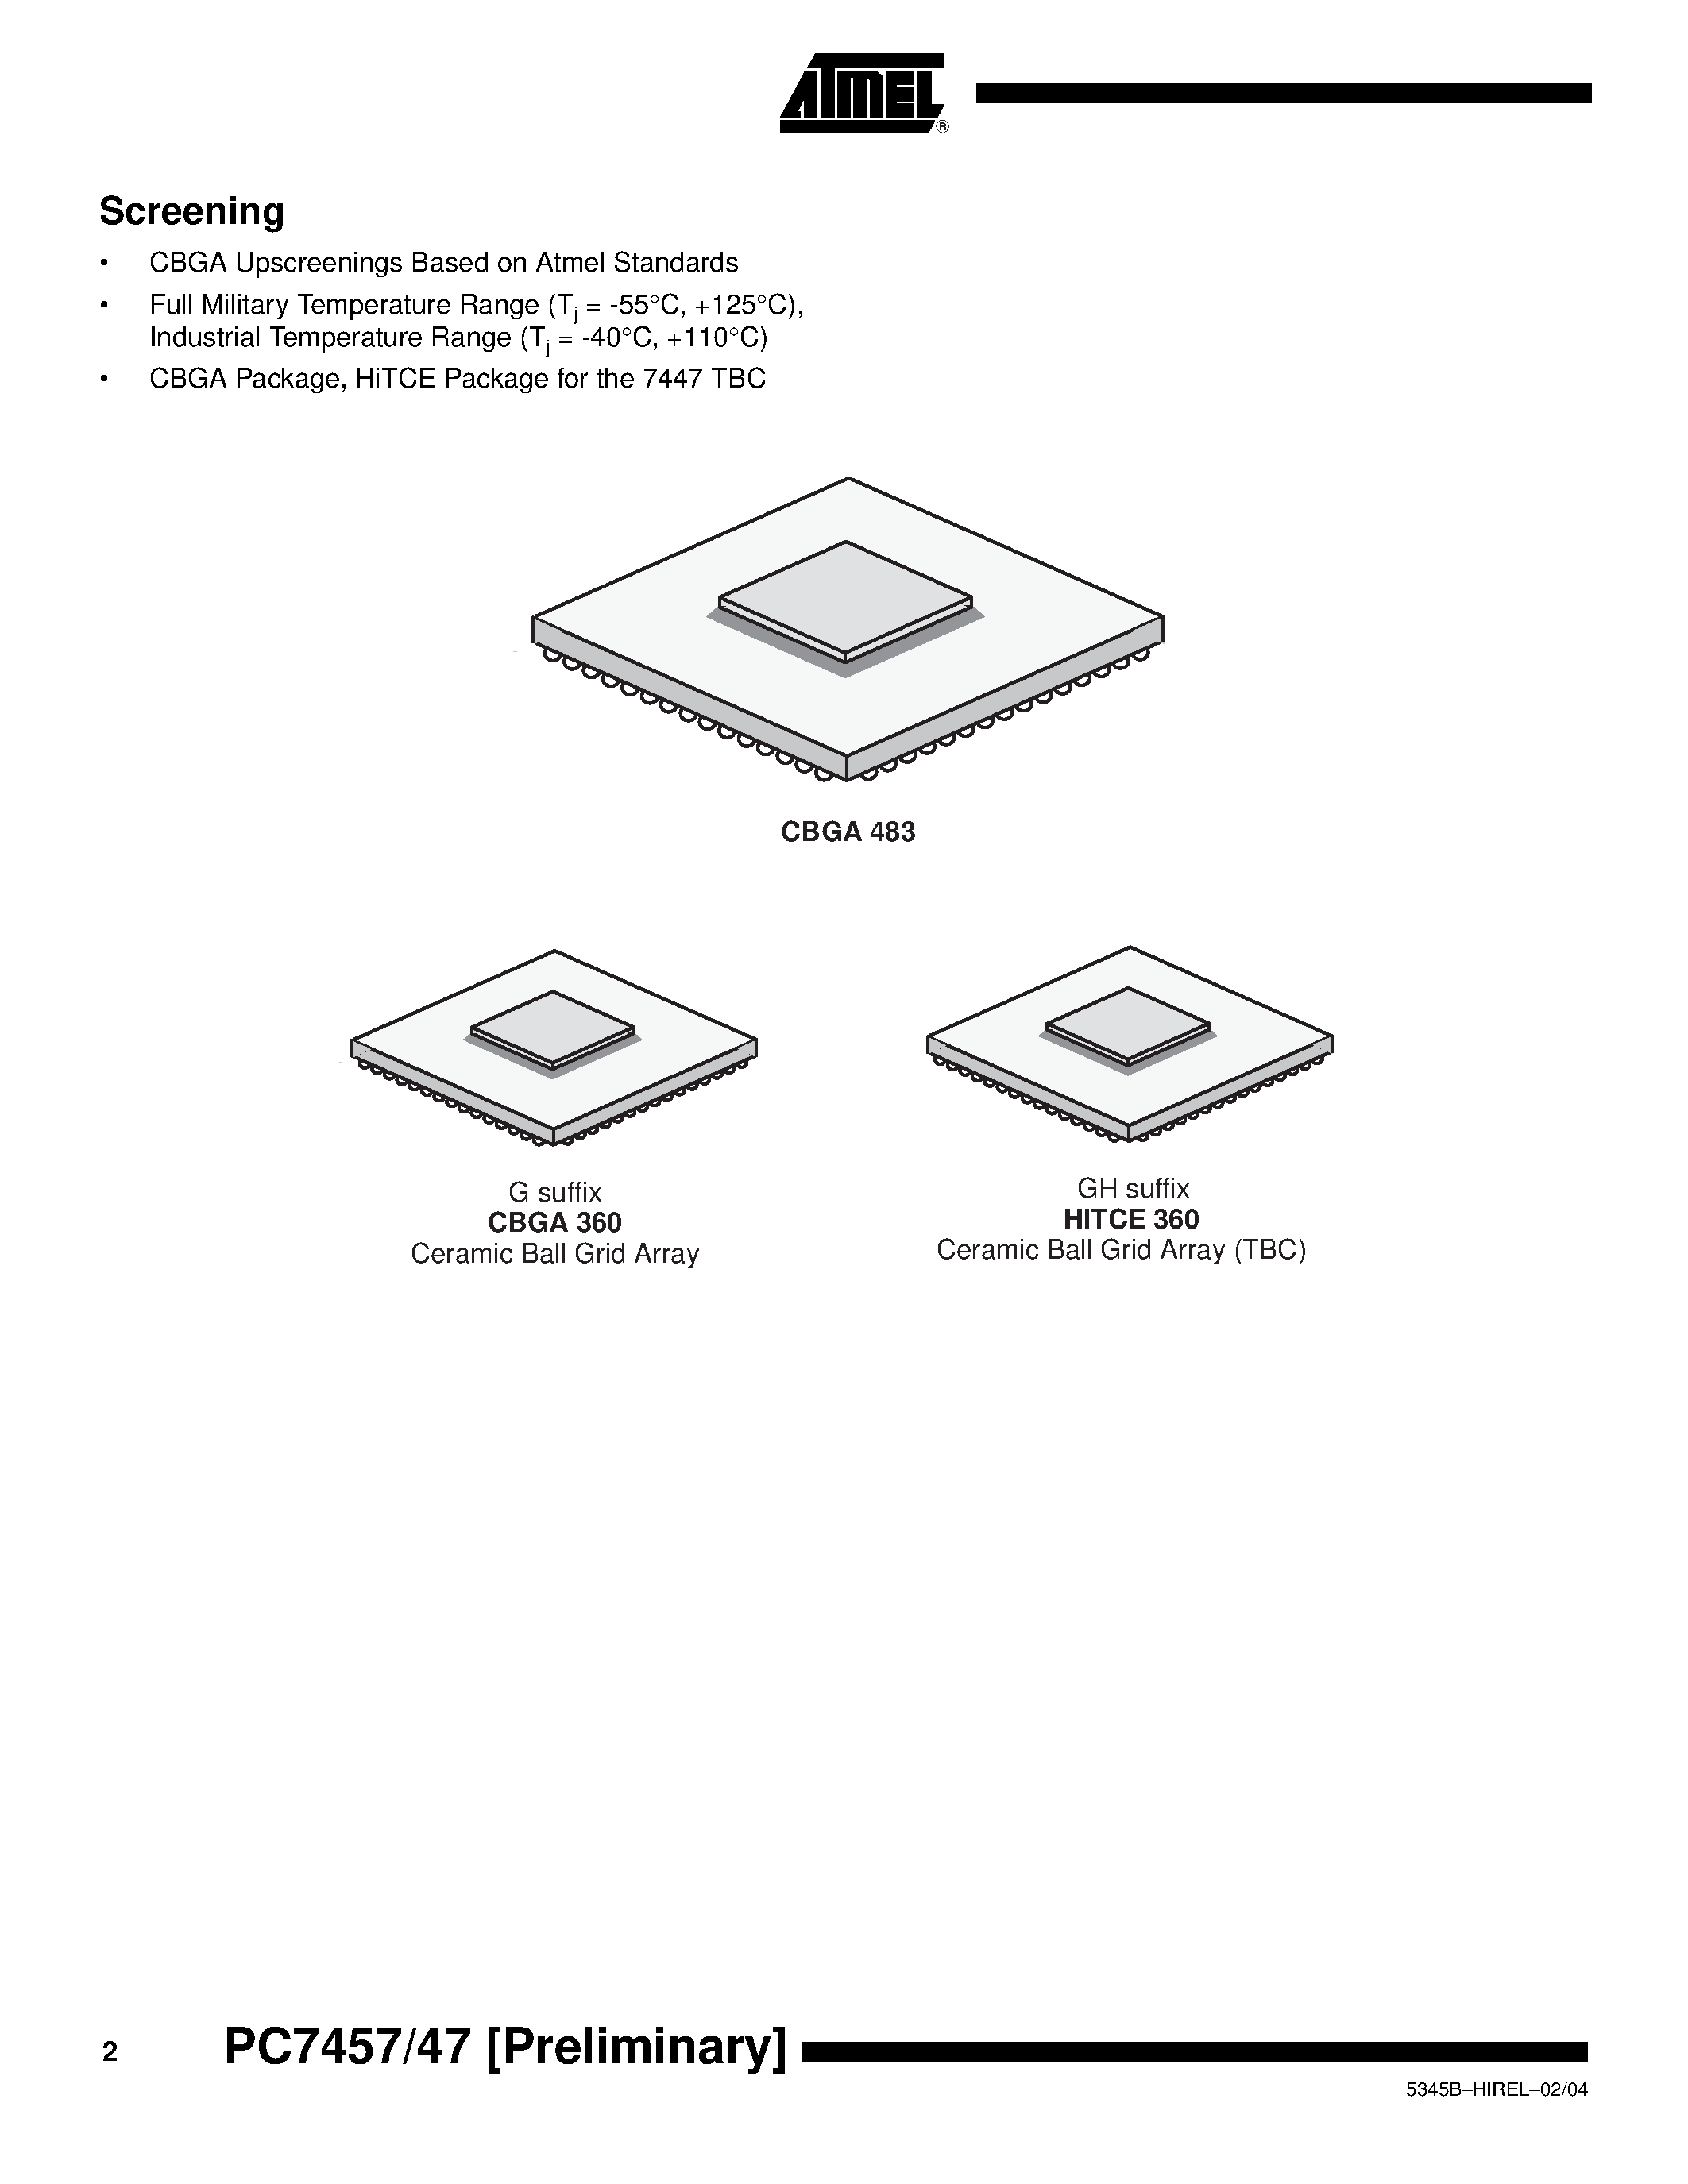 Datasheet PC7447 - (PC7447 / PC7457) PowerPC 7457 RISC Microprocessor page 2